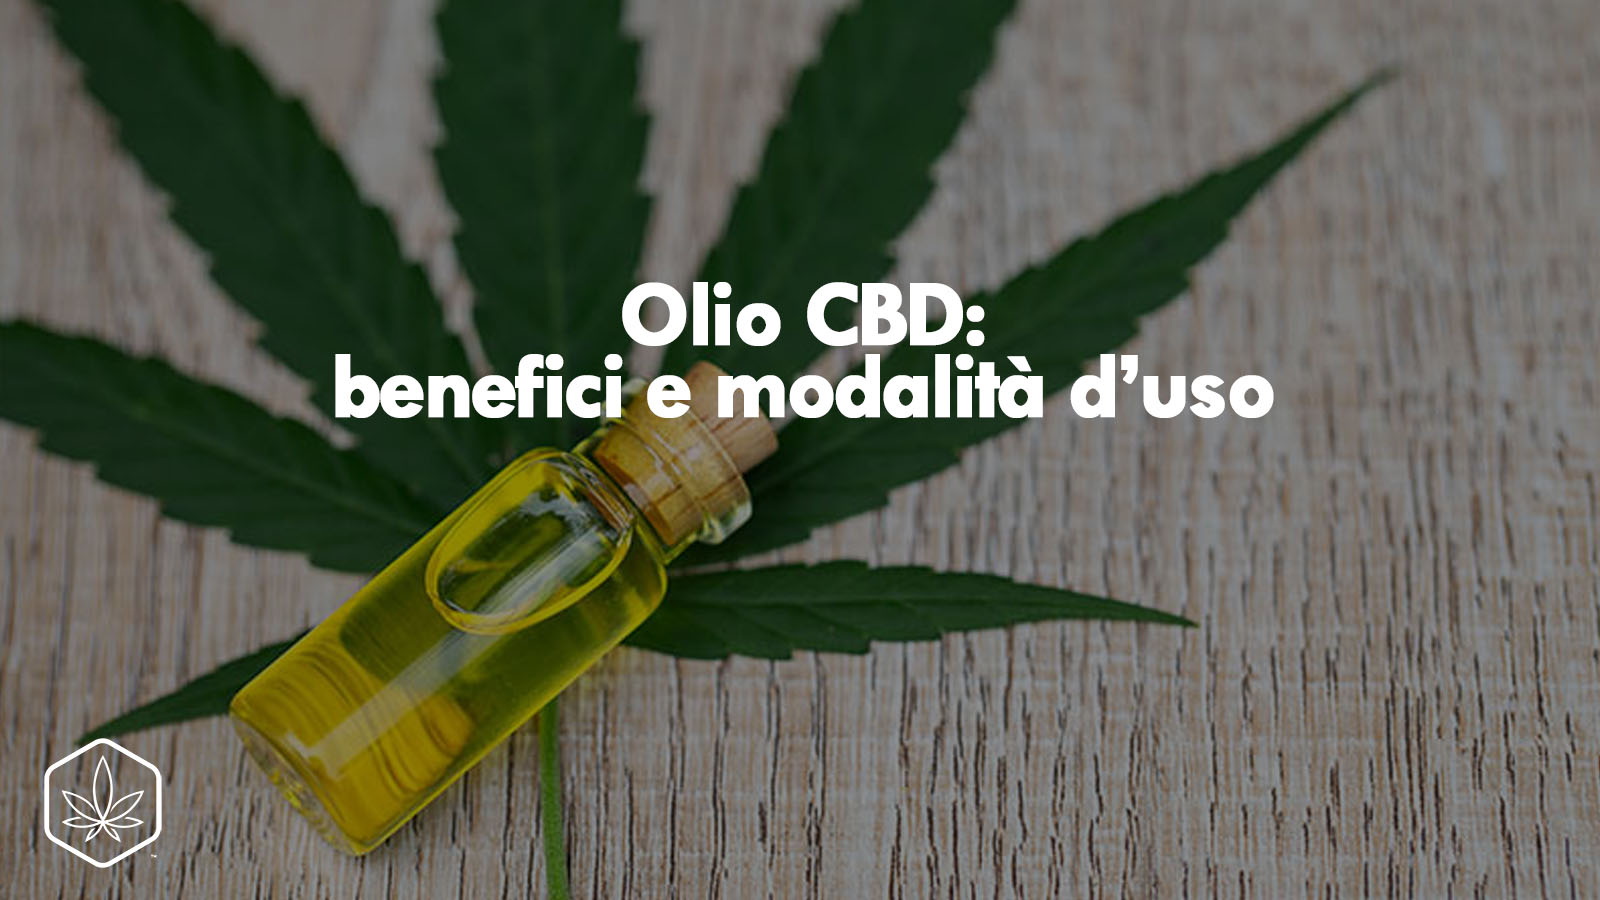 Olio CBD: benefici e modalità d'uso - guida completa - Hemp Embassy -  Cannabis Light & Hash CBD Online Shop